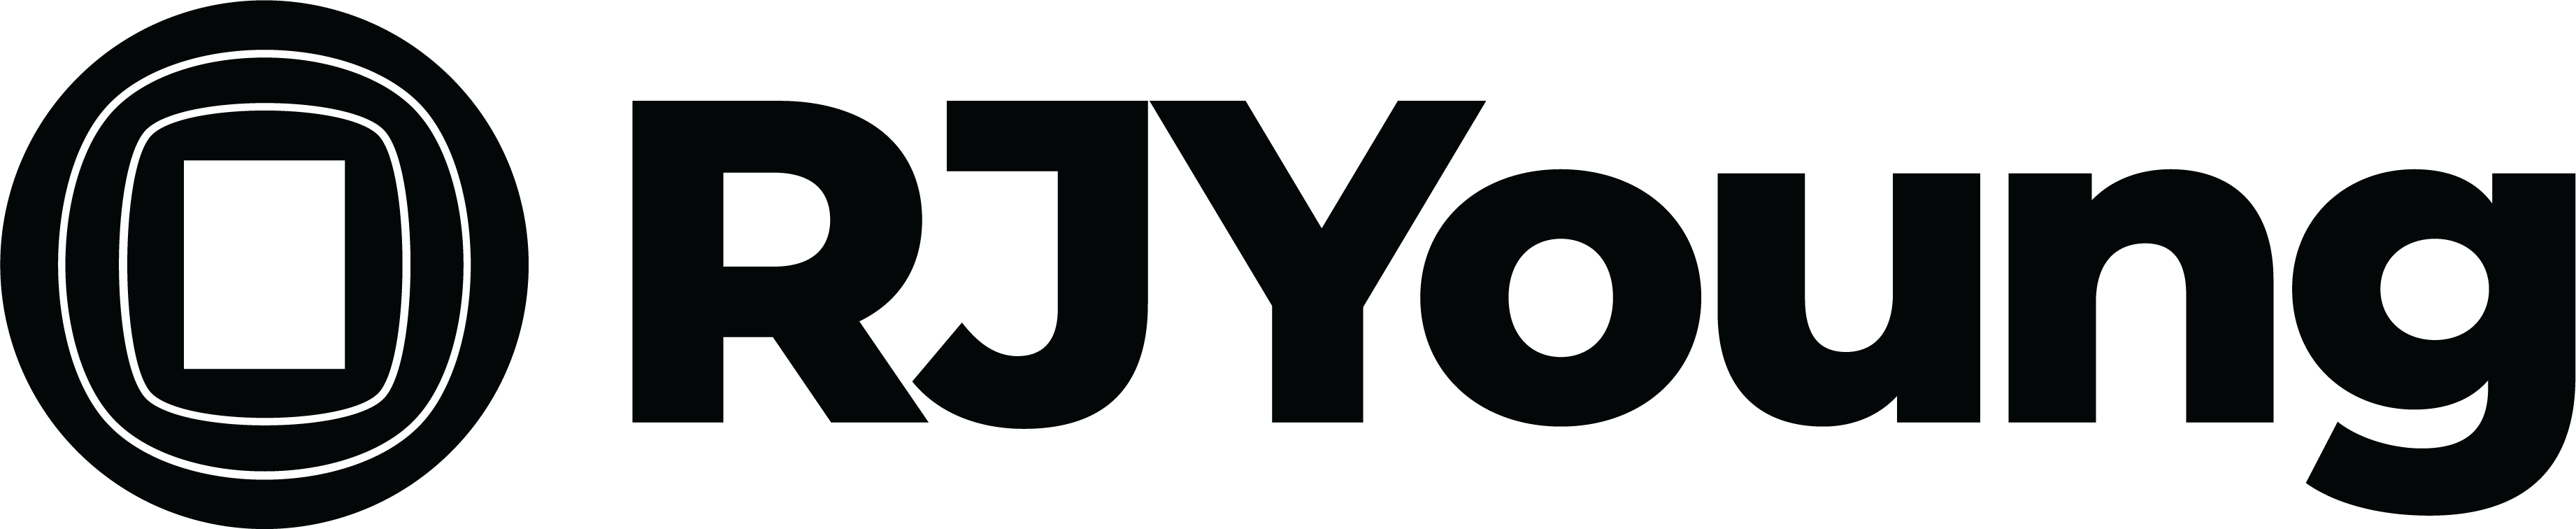 RJY Logo_Single Color